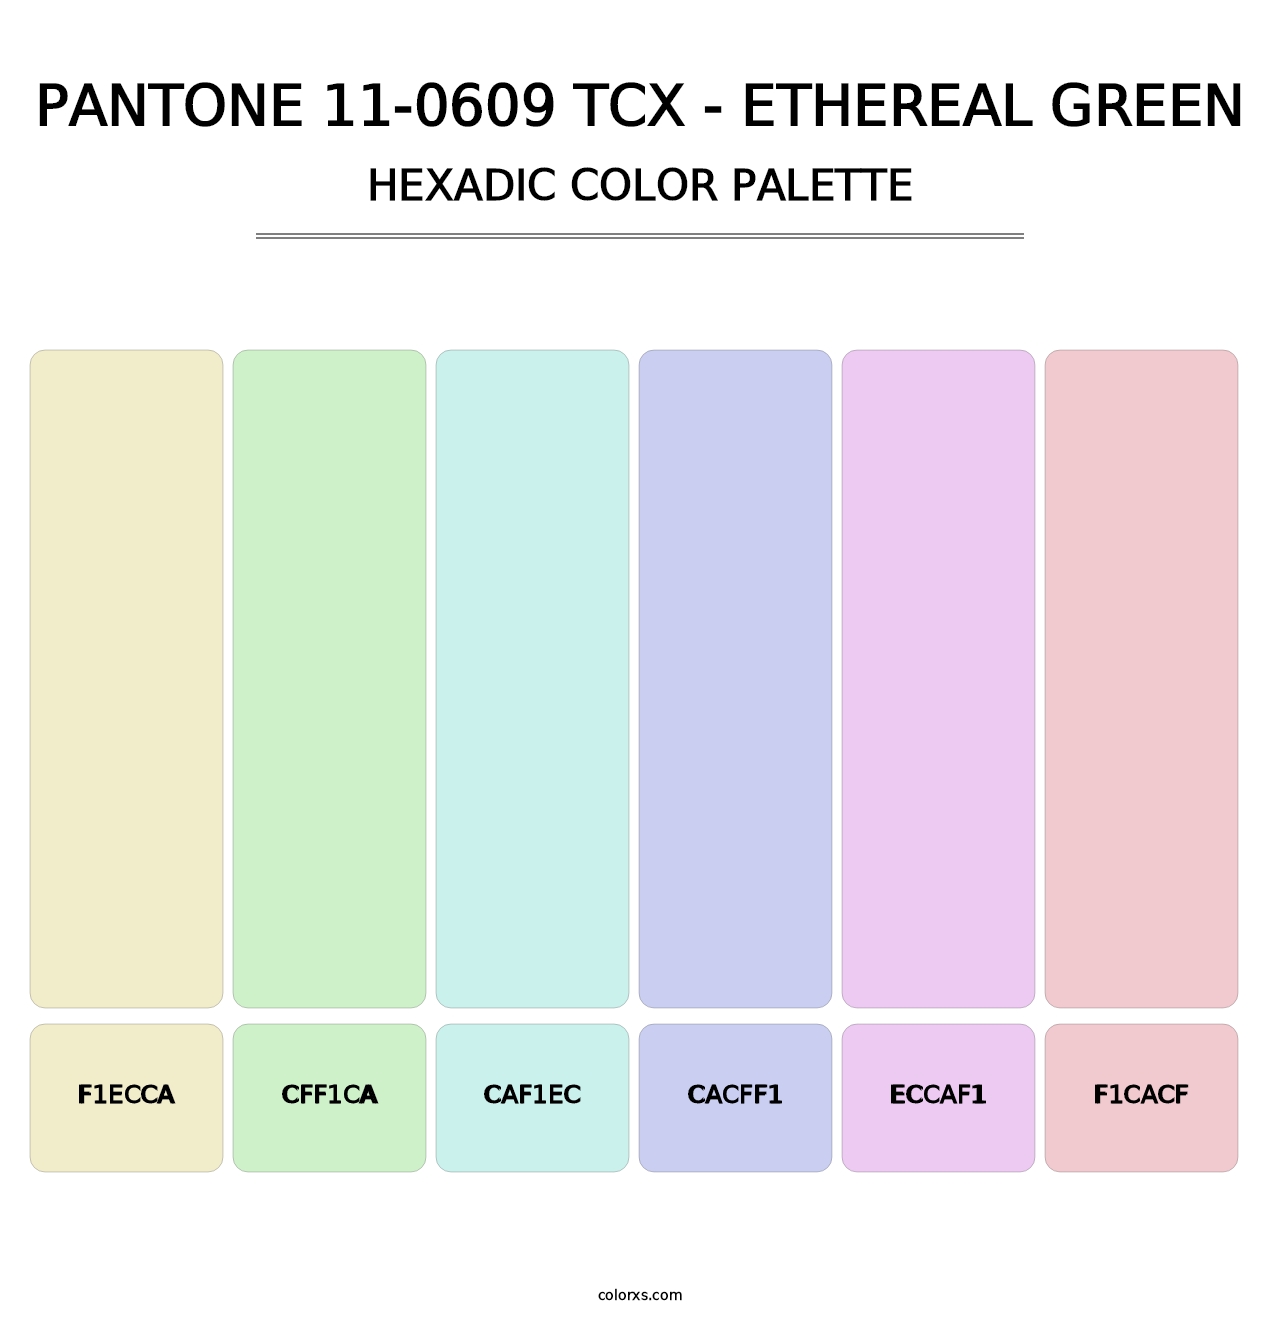 PANTONE 11-0609 TCX - Ethereal Green - Hexadic Color Palette